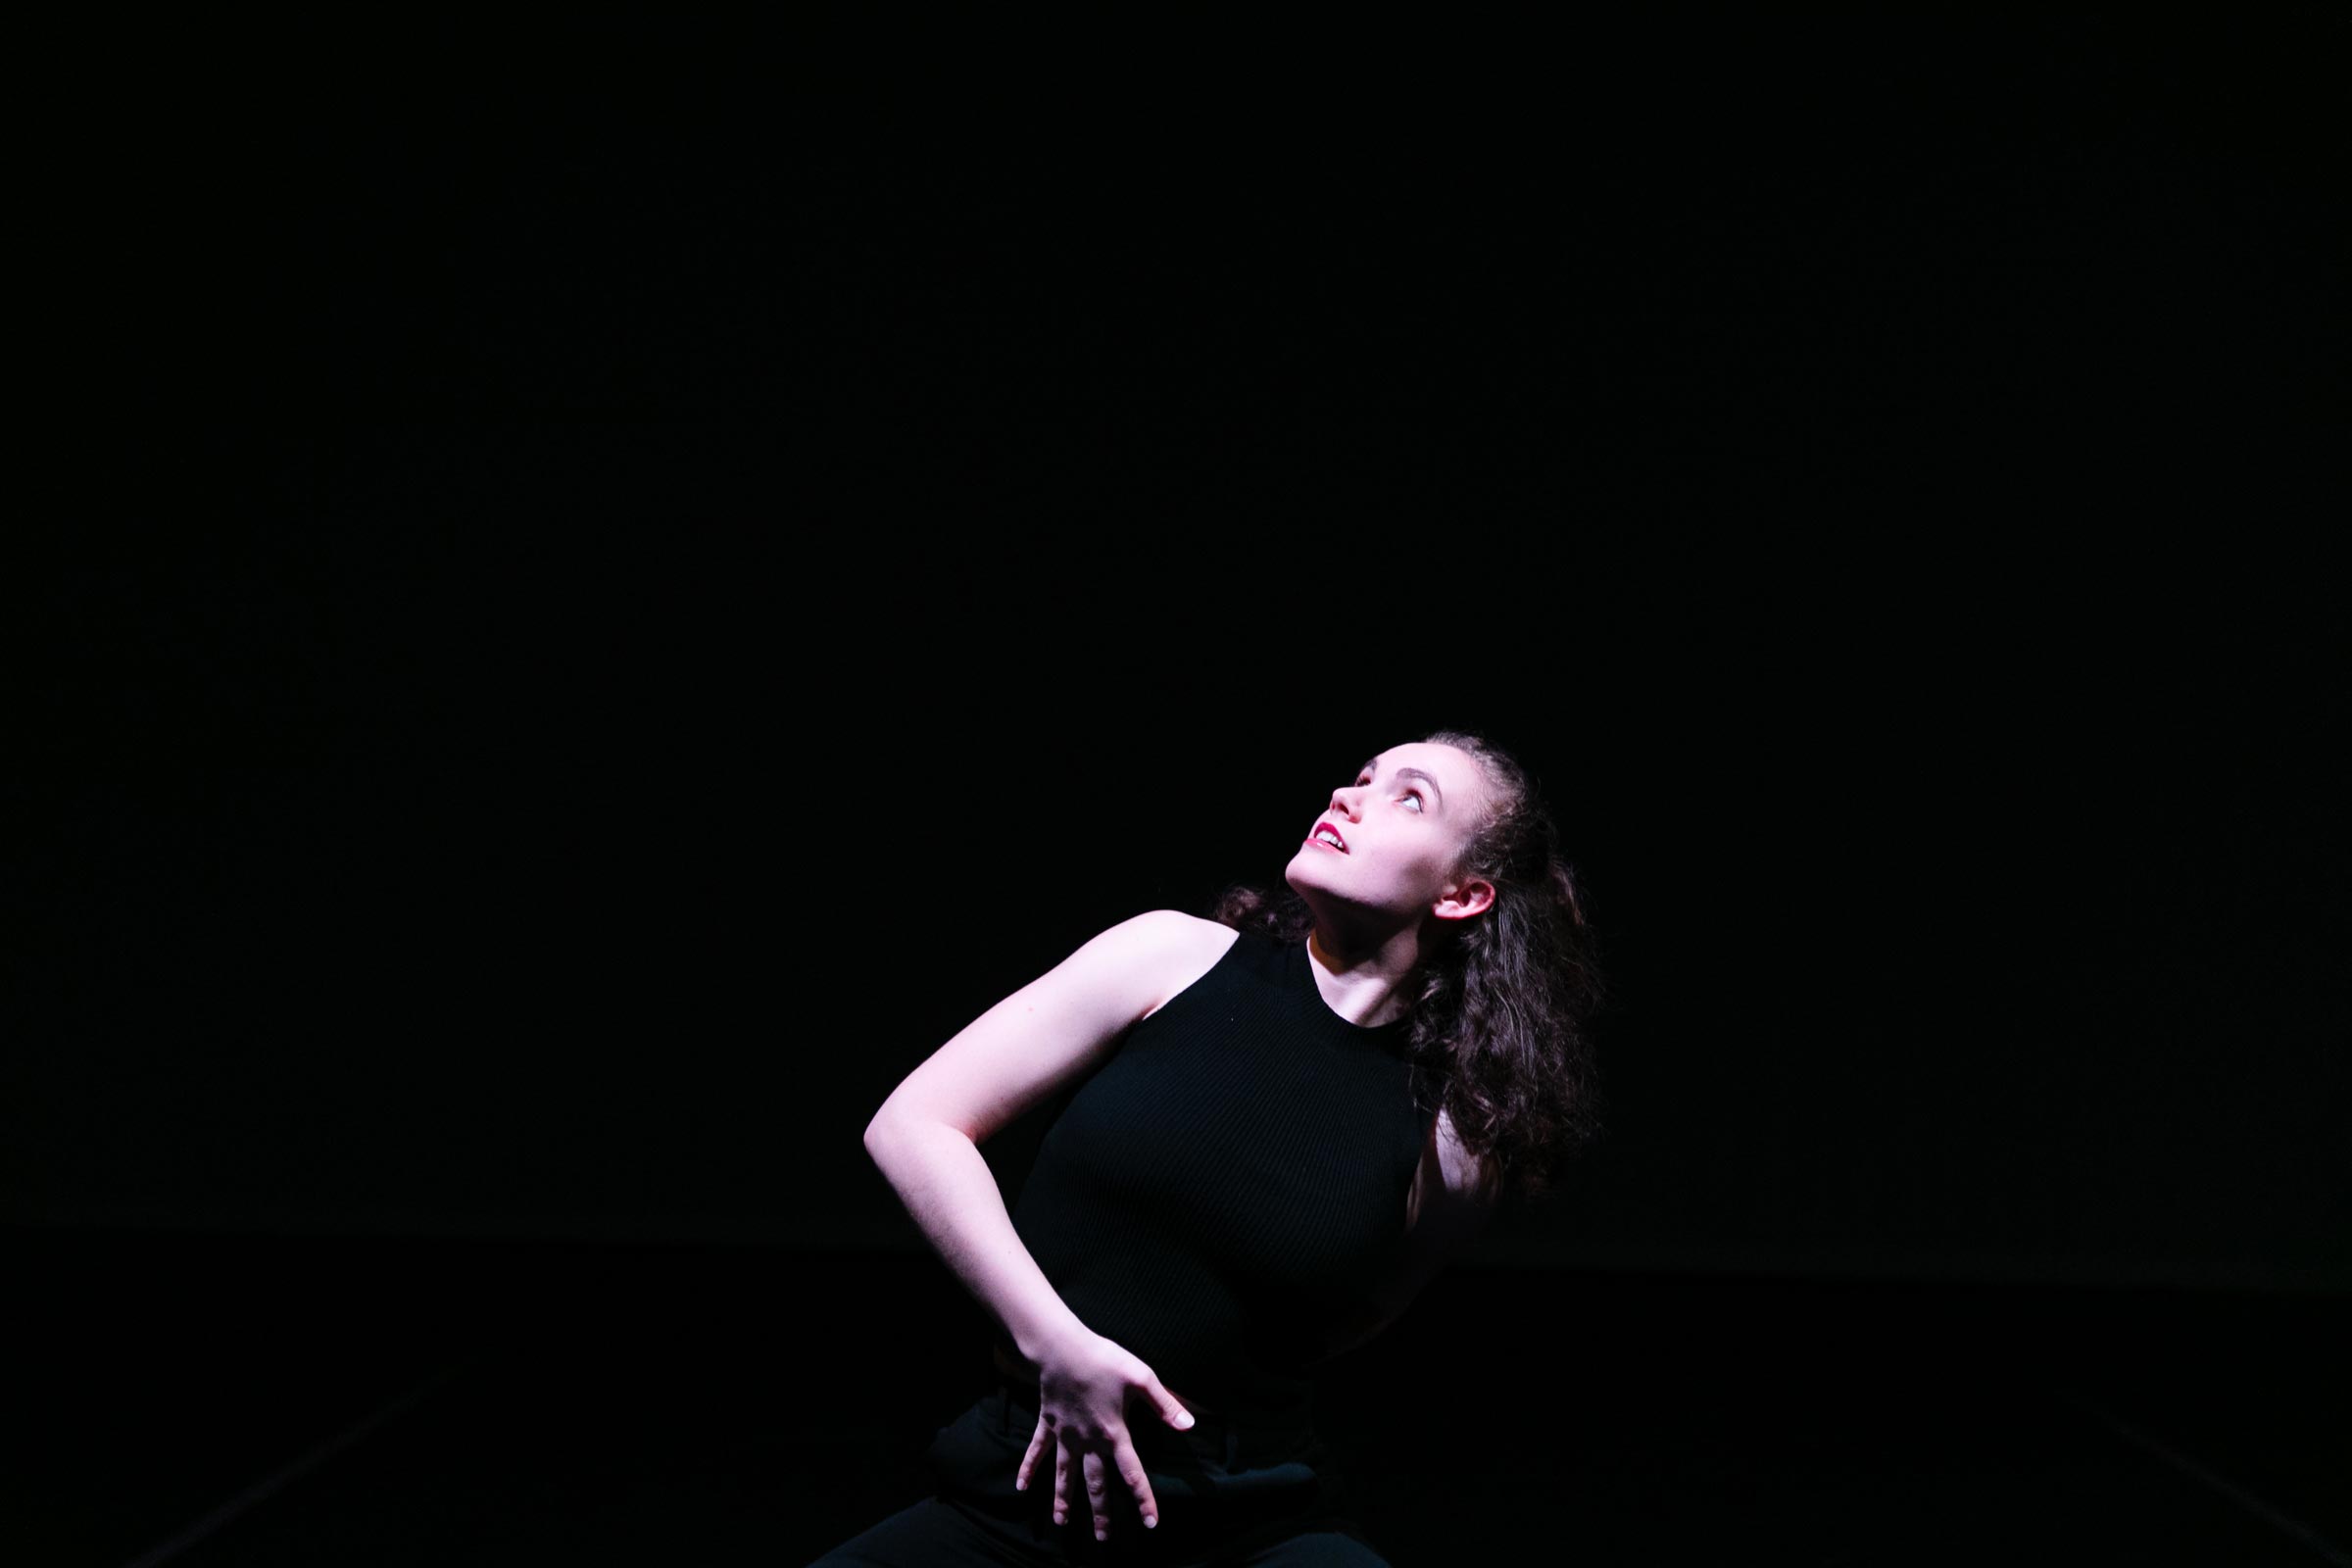 Zoe Ziff dances, dressed in black, on a black background